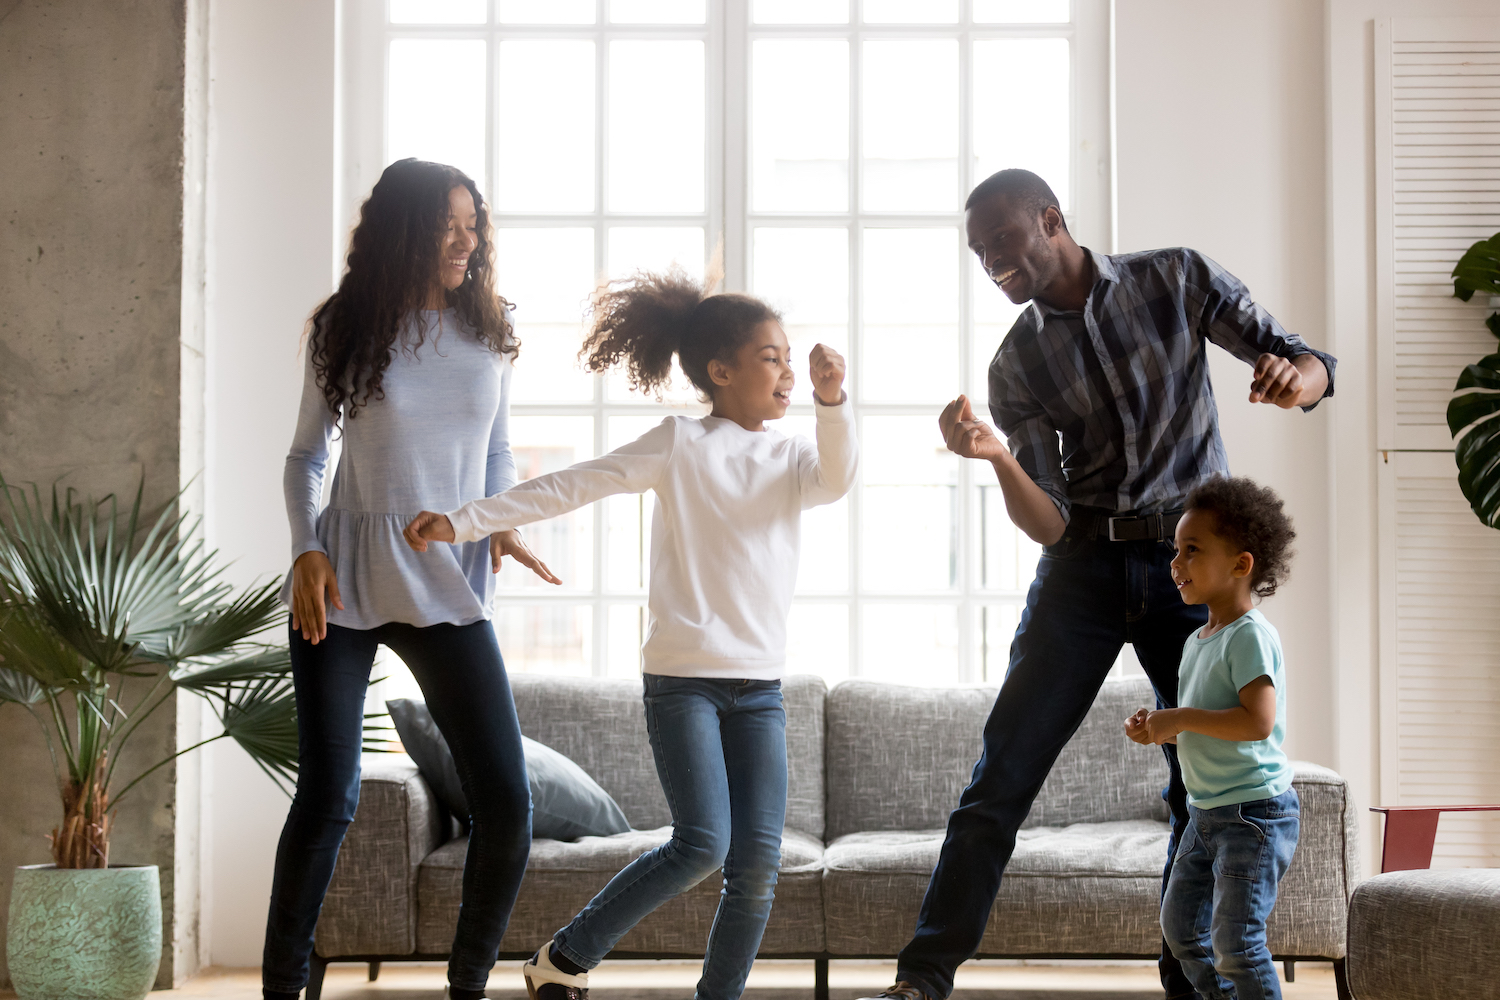 family dancing in living room